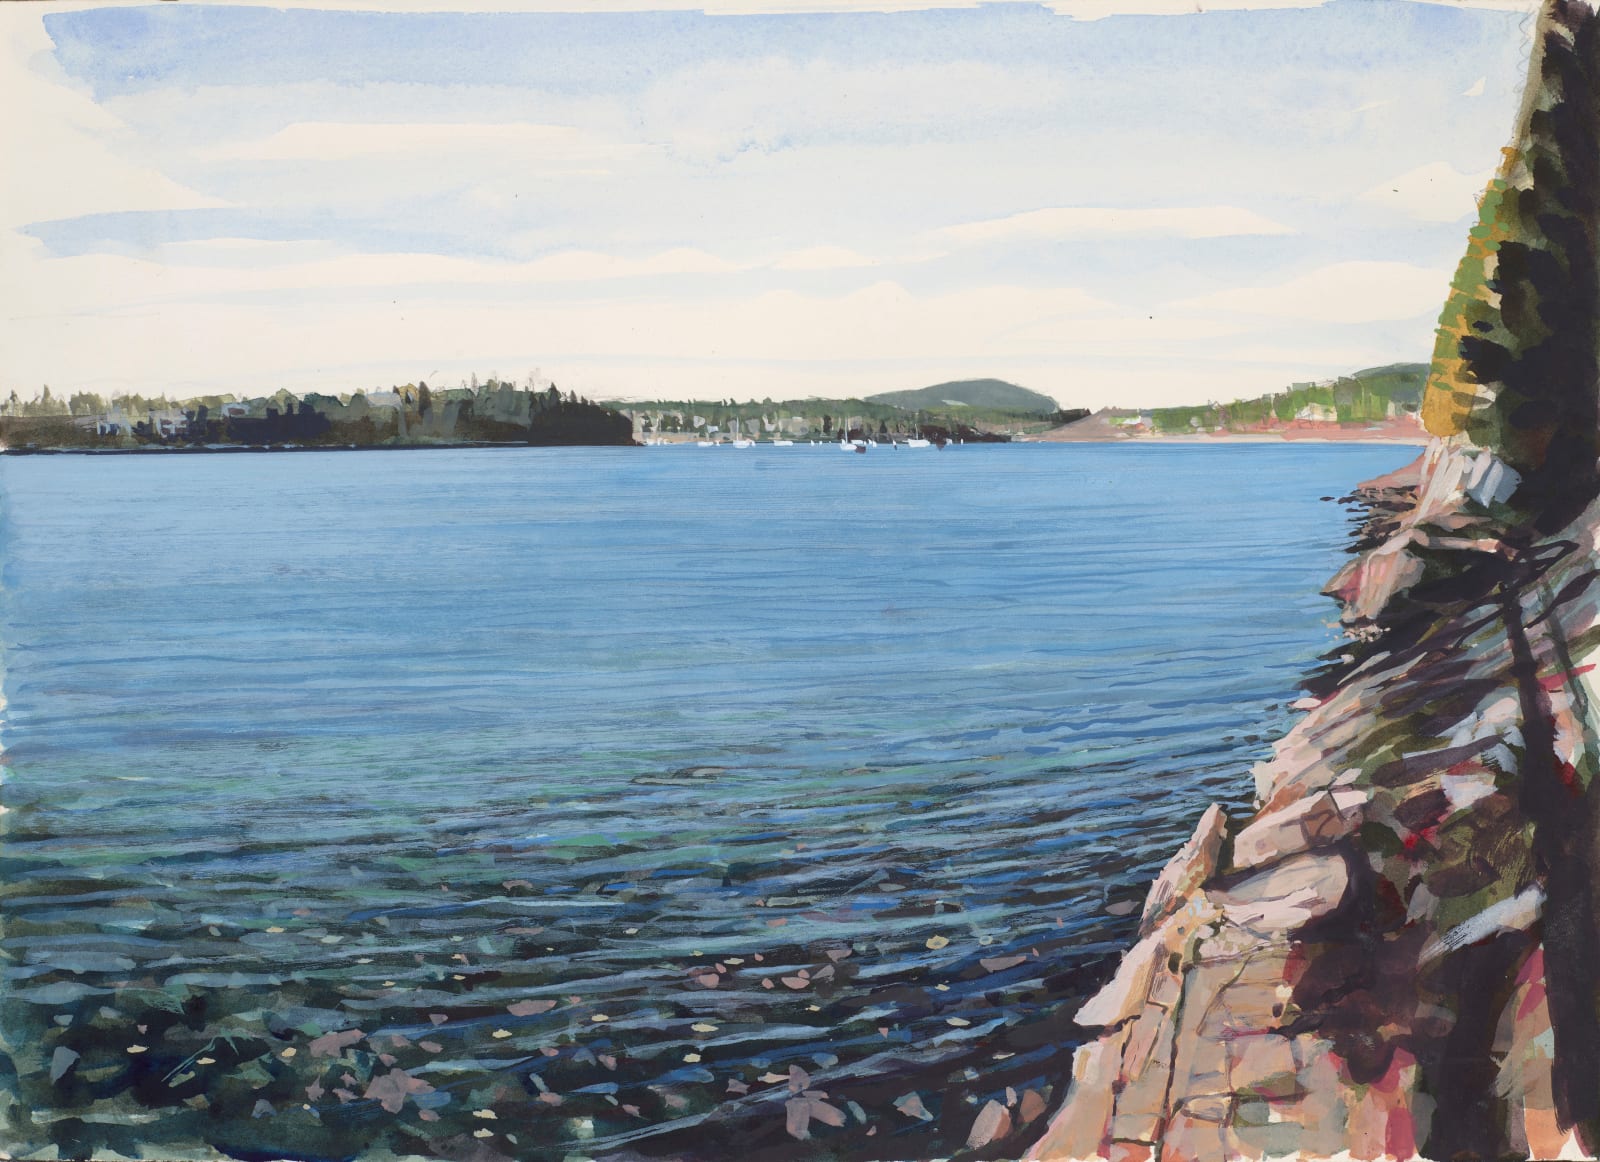 Richard Estes, Coast of Maine, c. 2020